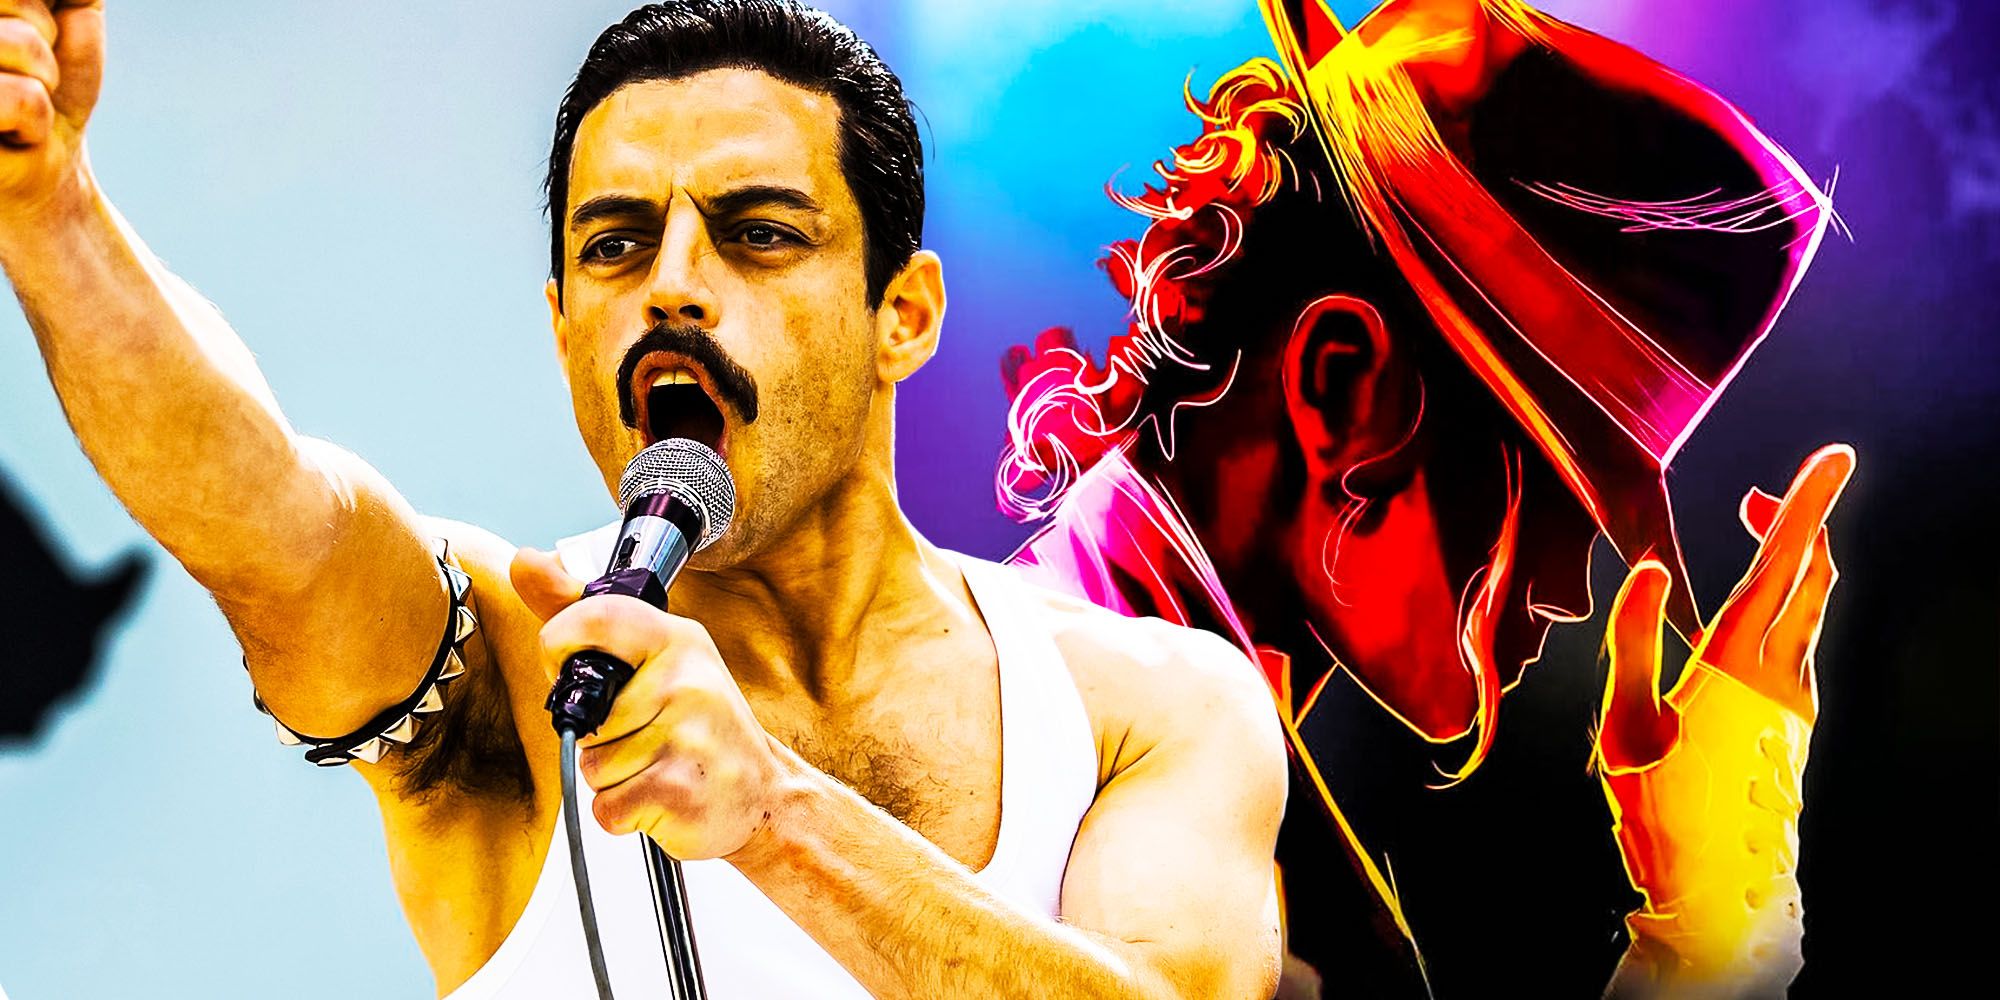 Michael Jackson biopic Must Avoid Bohemian Rhapsody mistake